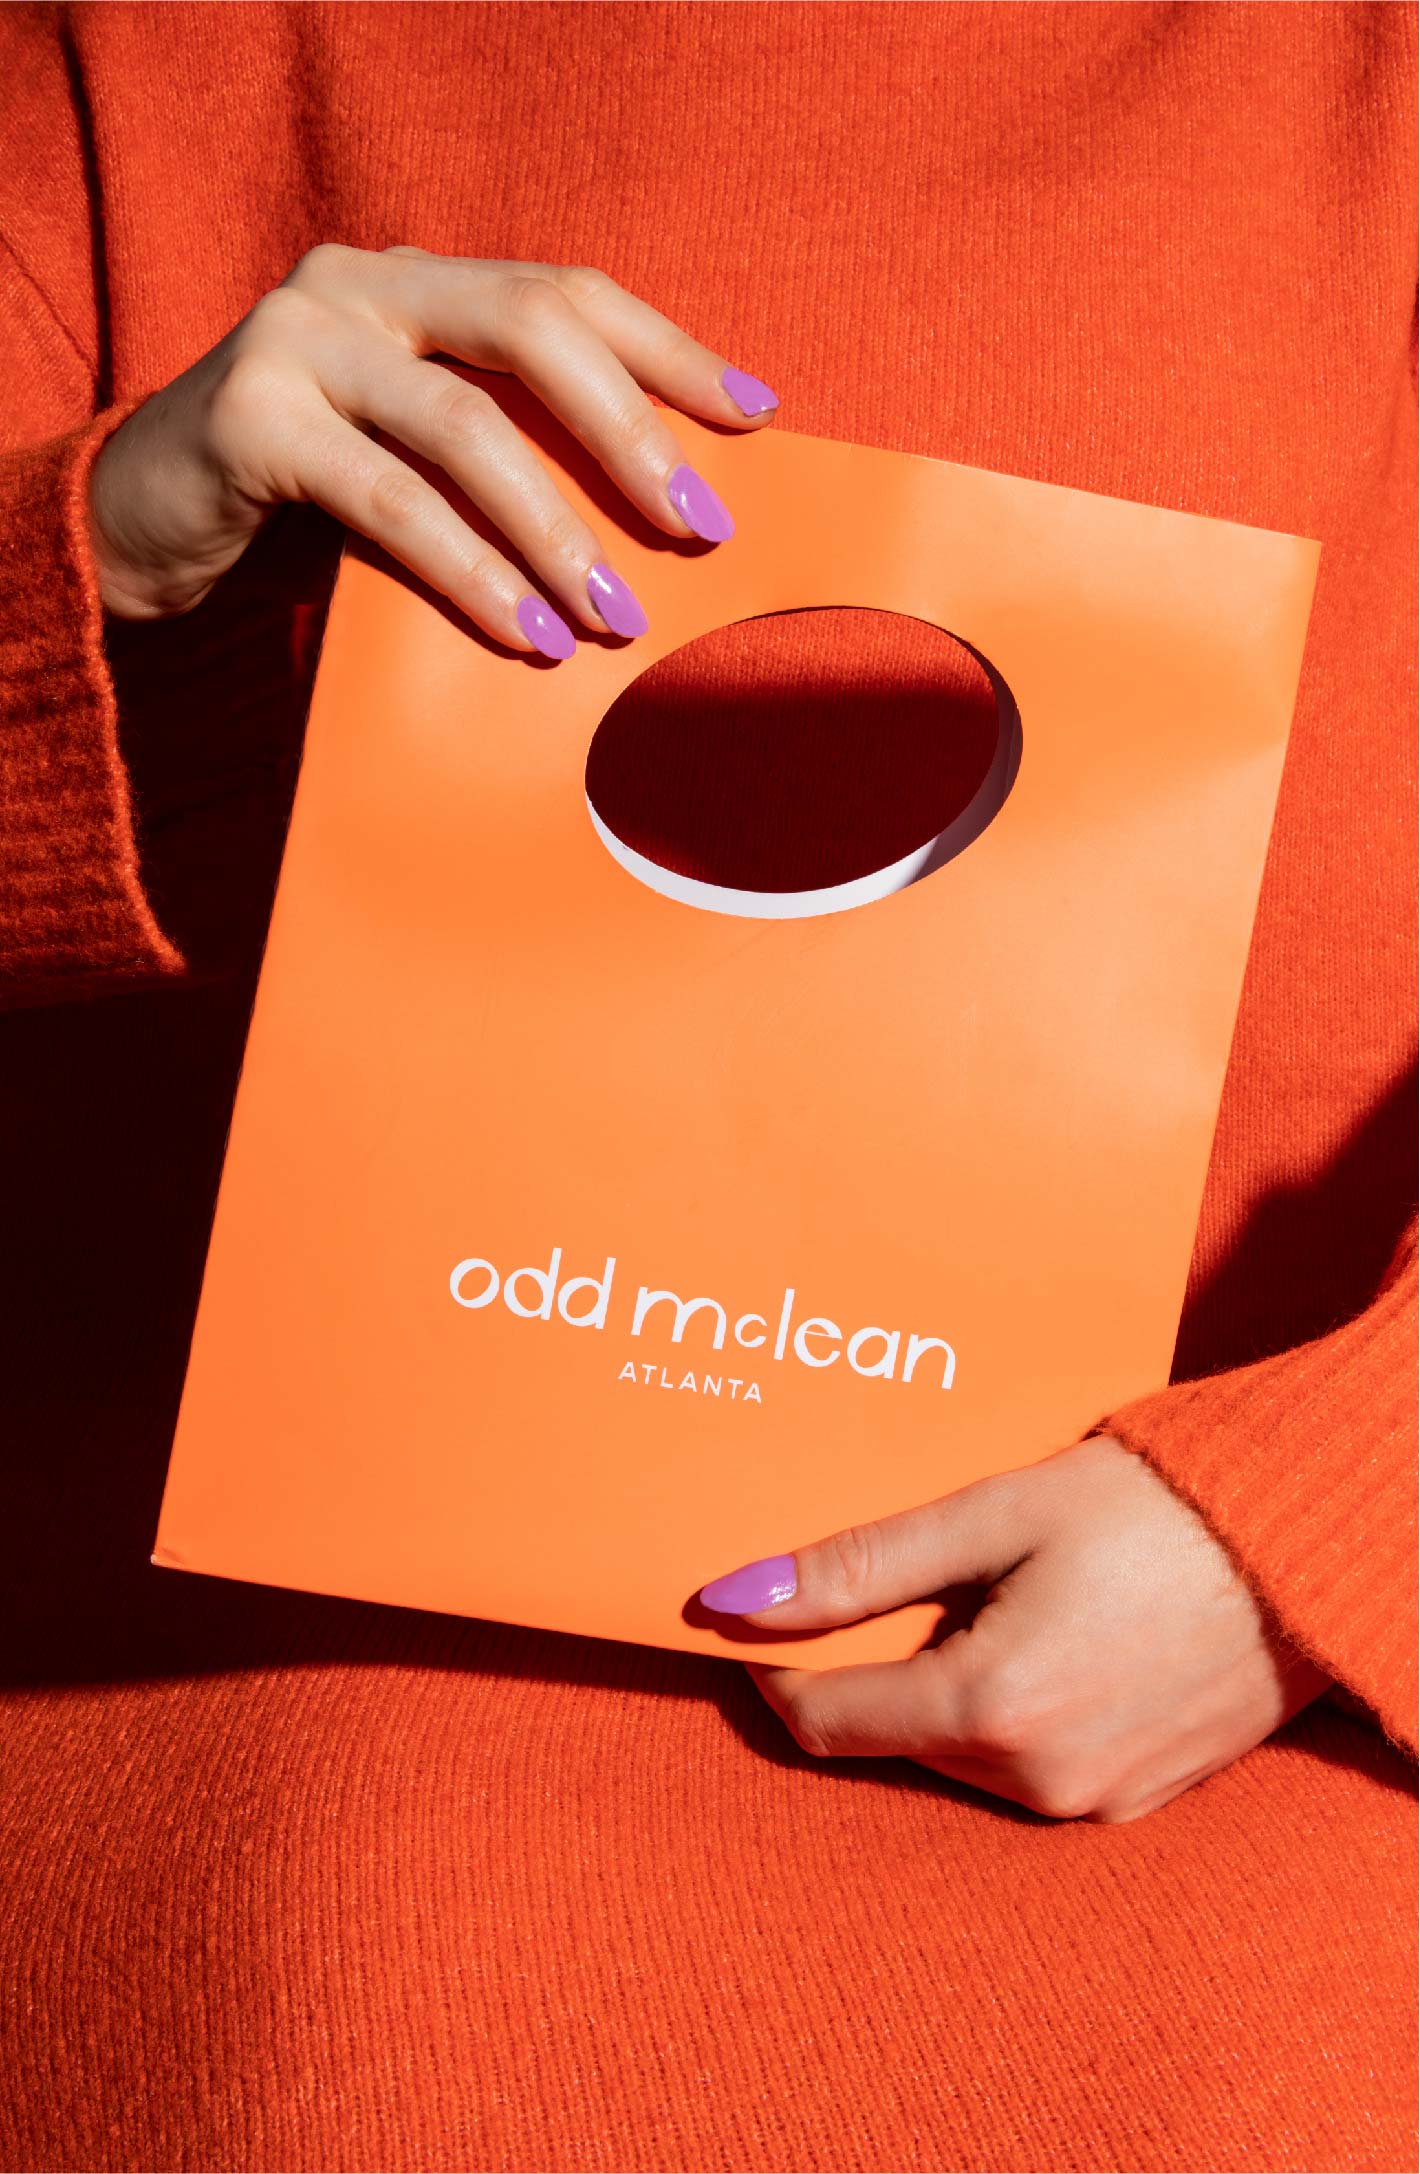 Odd McLean Boutique Brand Design - World Brand Design Society